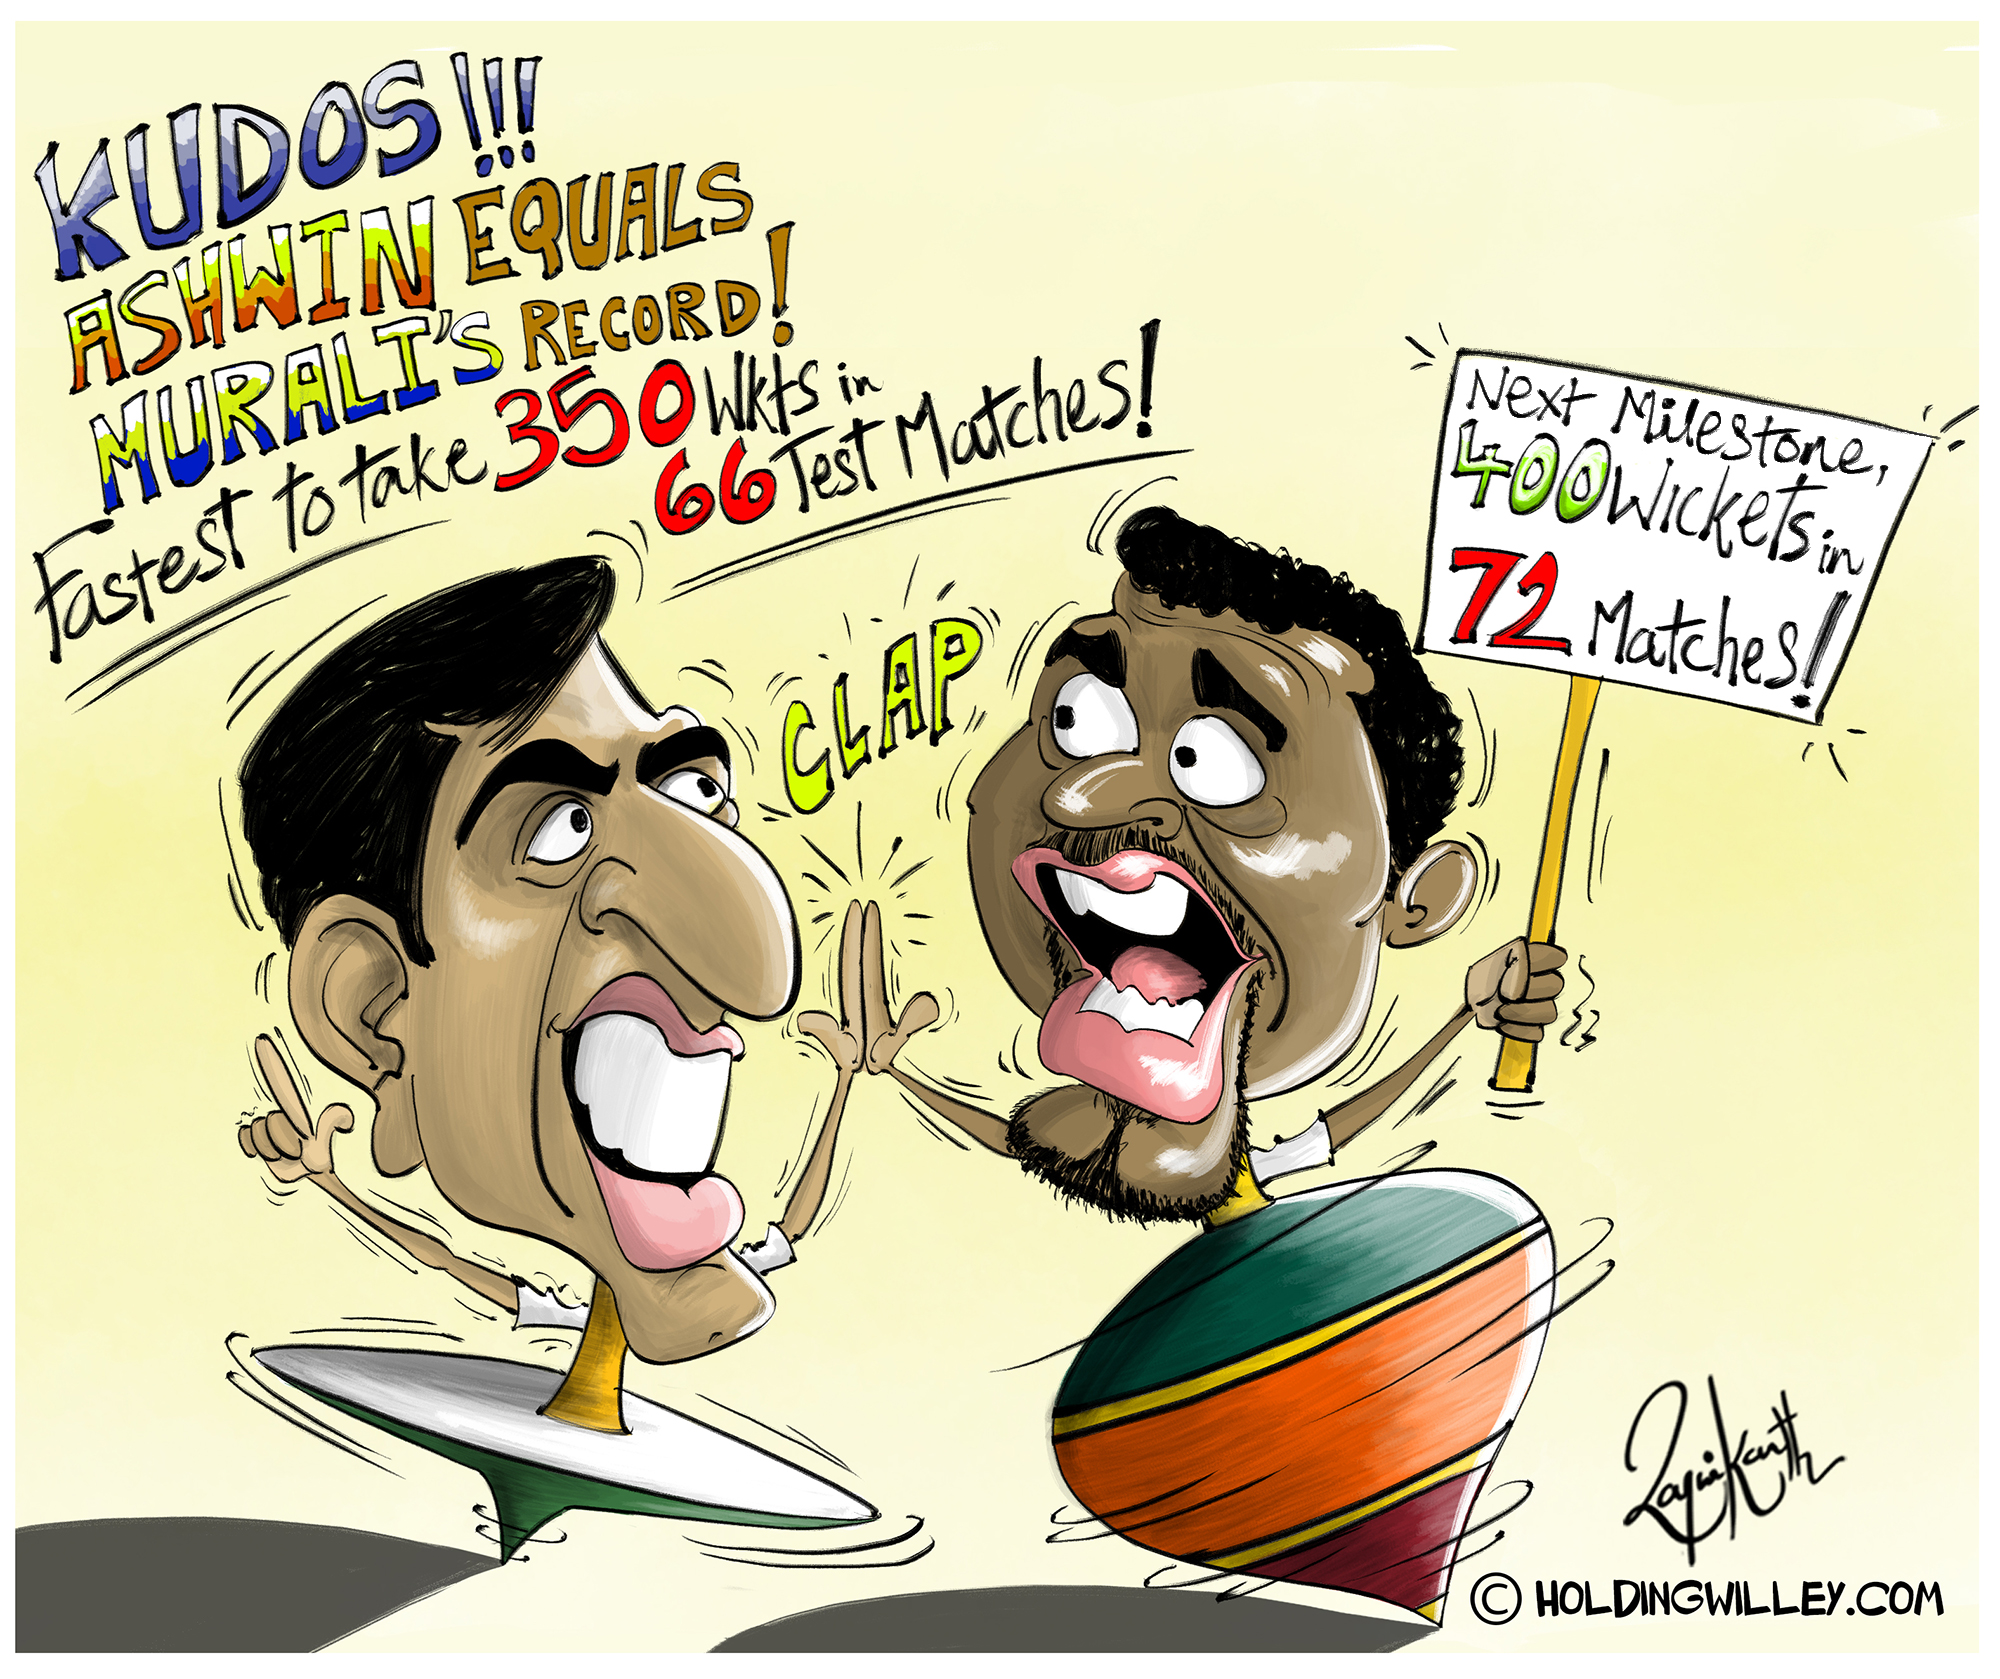 Ravichandran_Ashwin_wickets_India_record_Test_Cricket